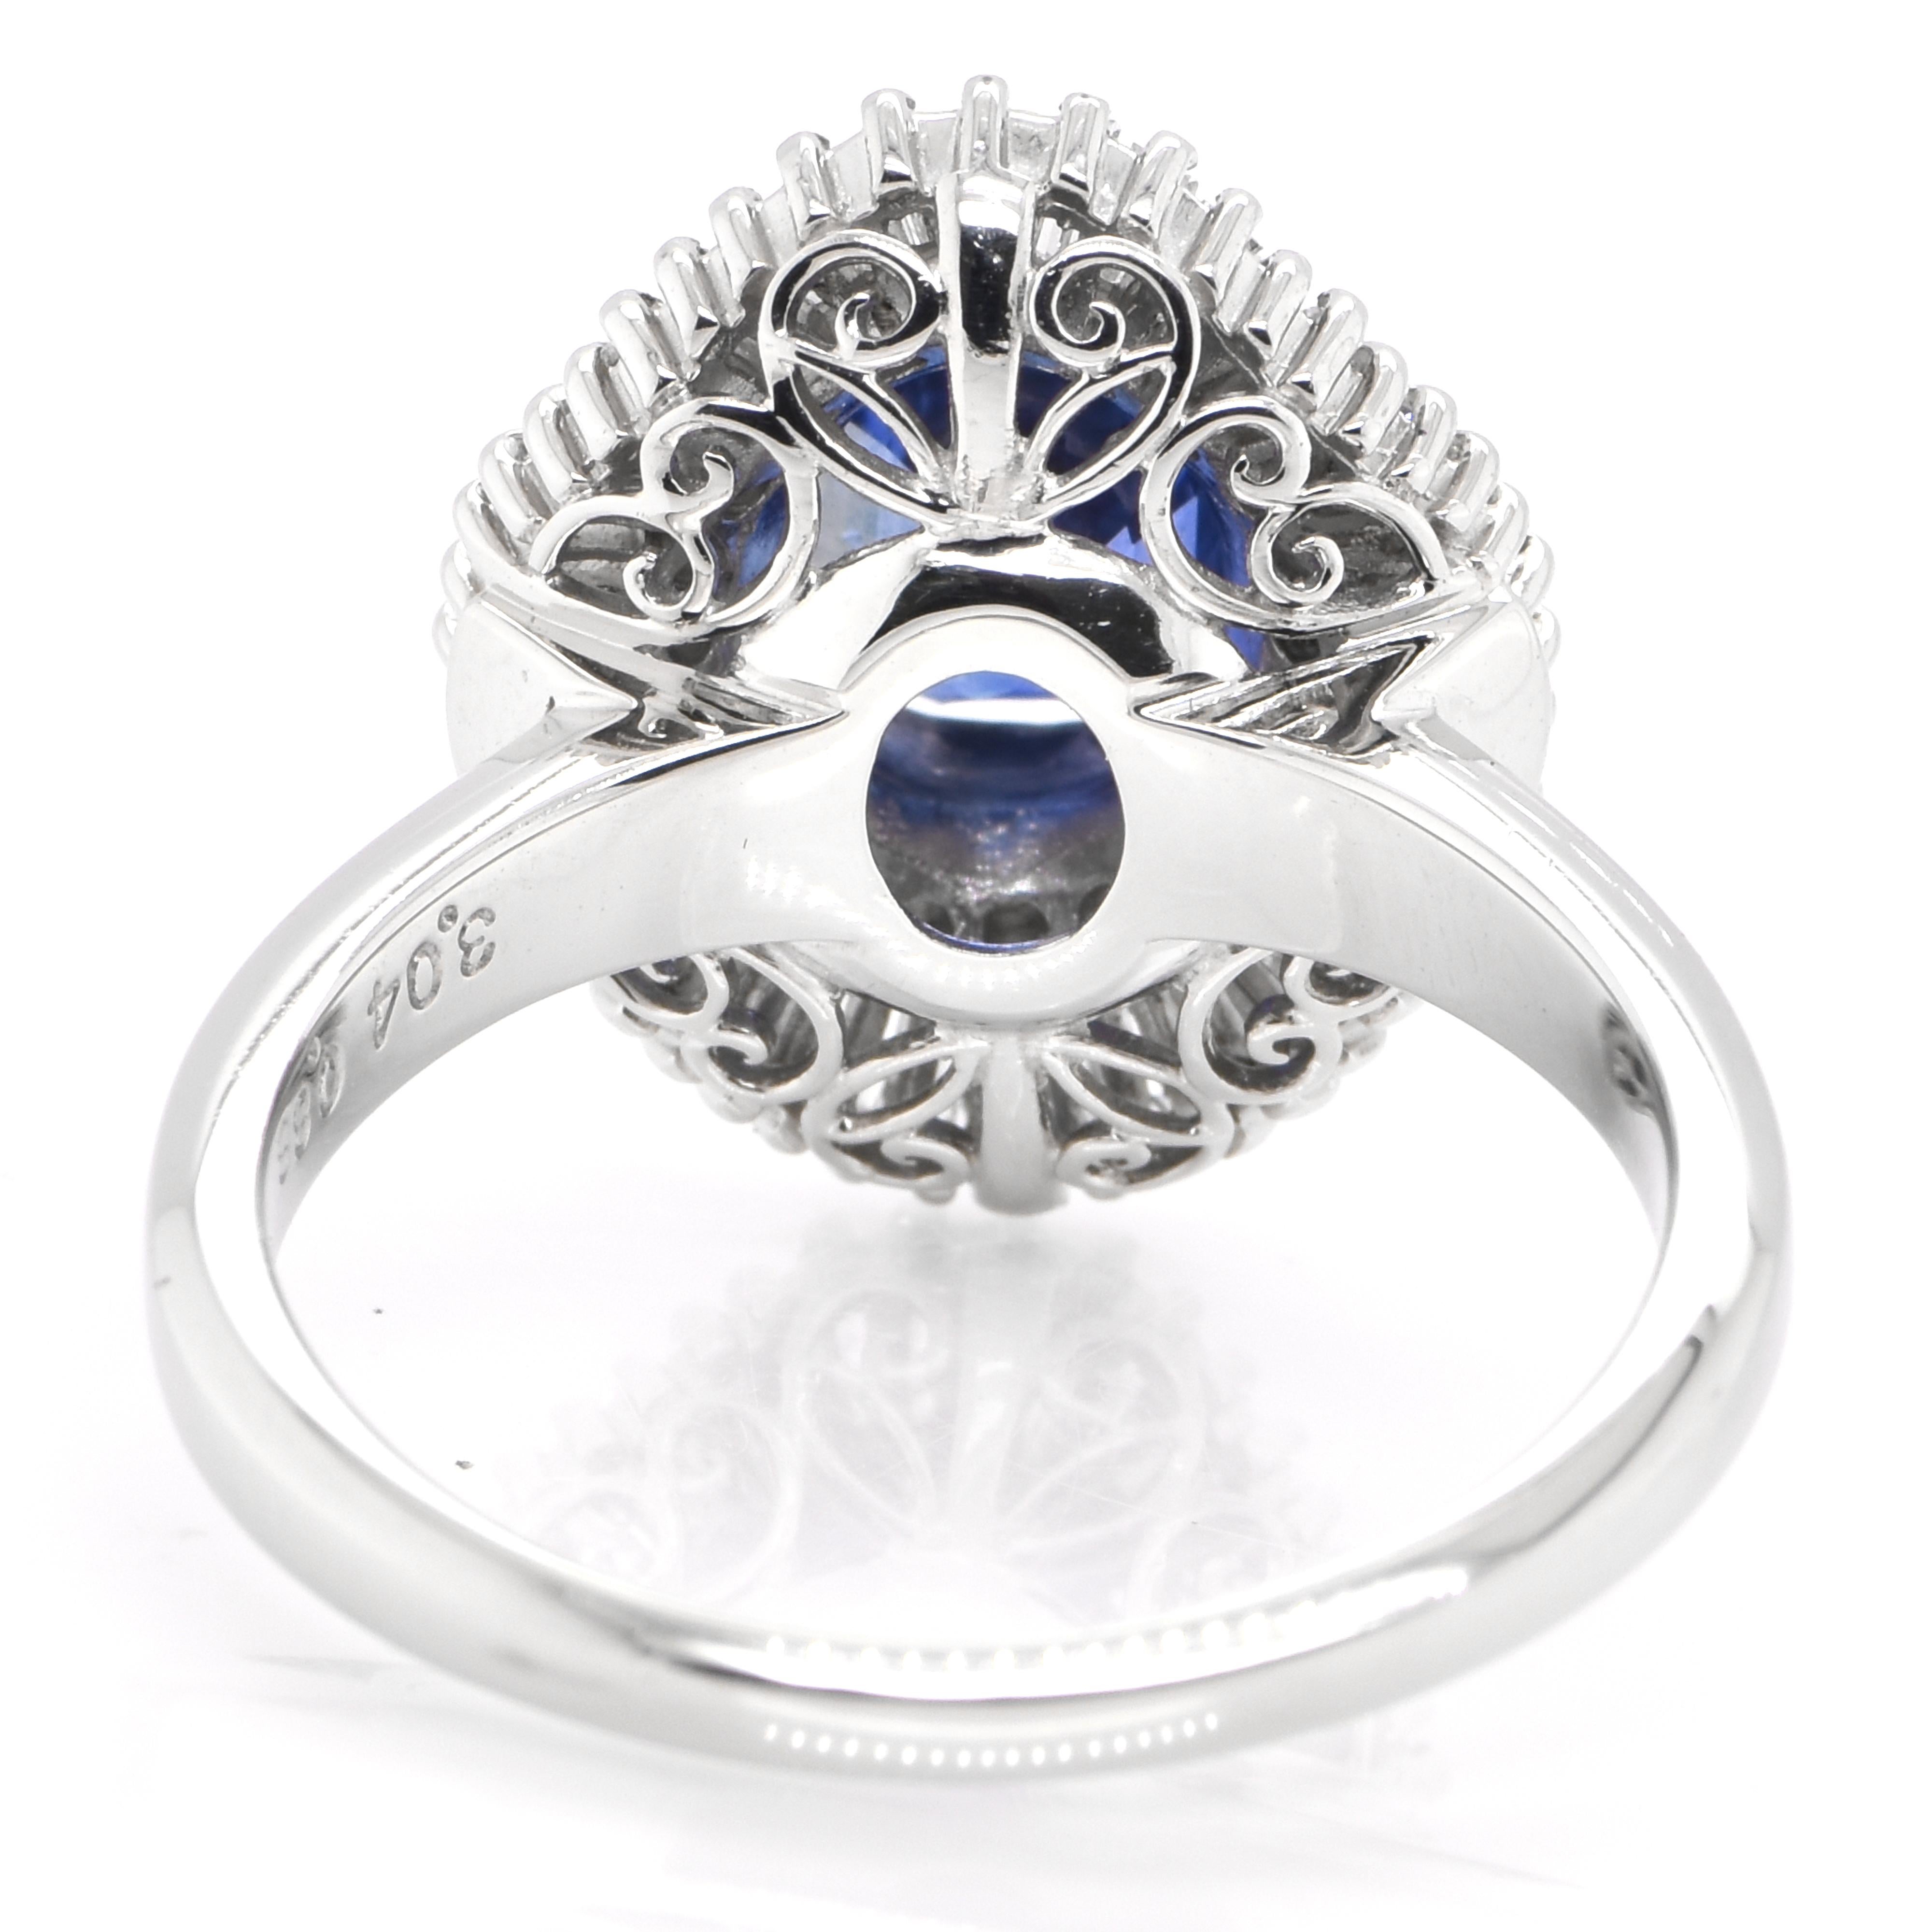 Women's 3.04 Carat Natural Blue Sapphire and Diamond Ballerina Ring Set in Platinum